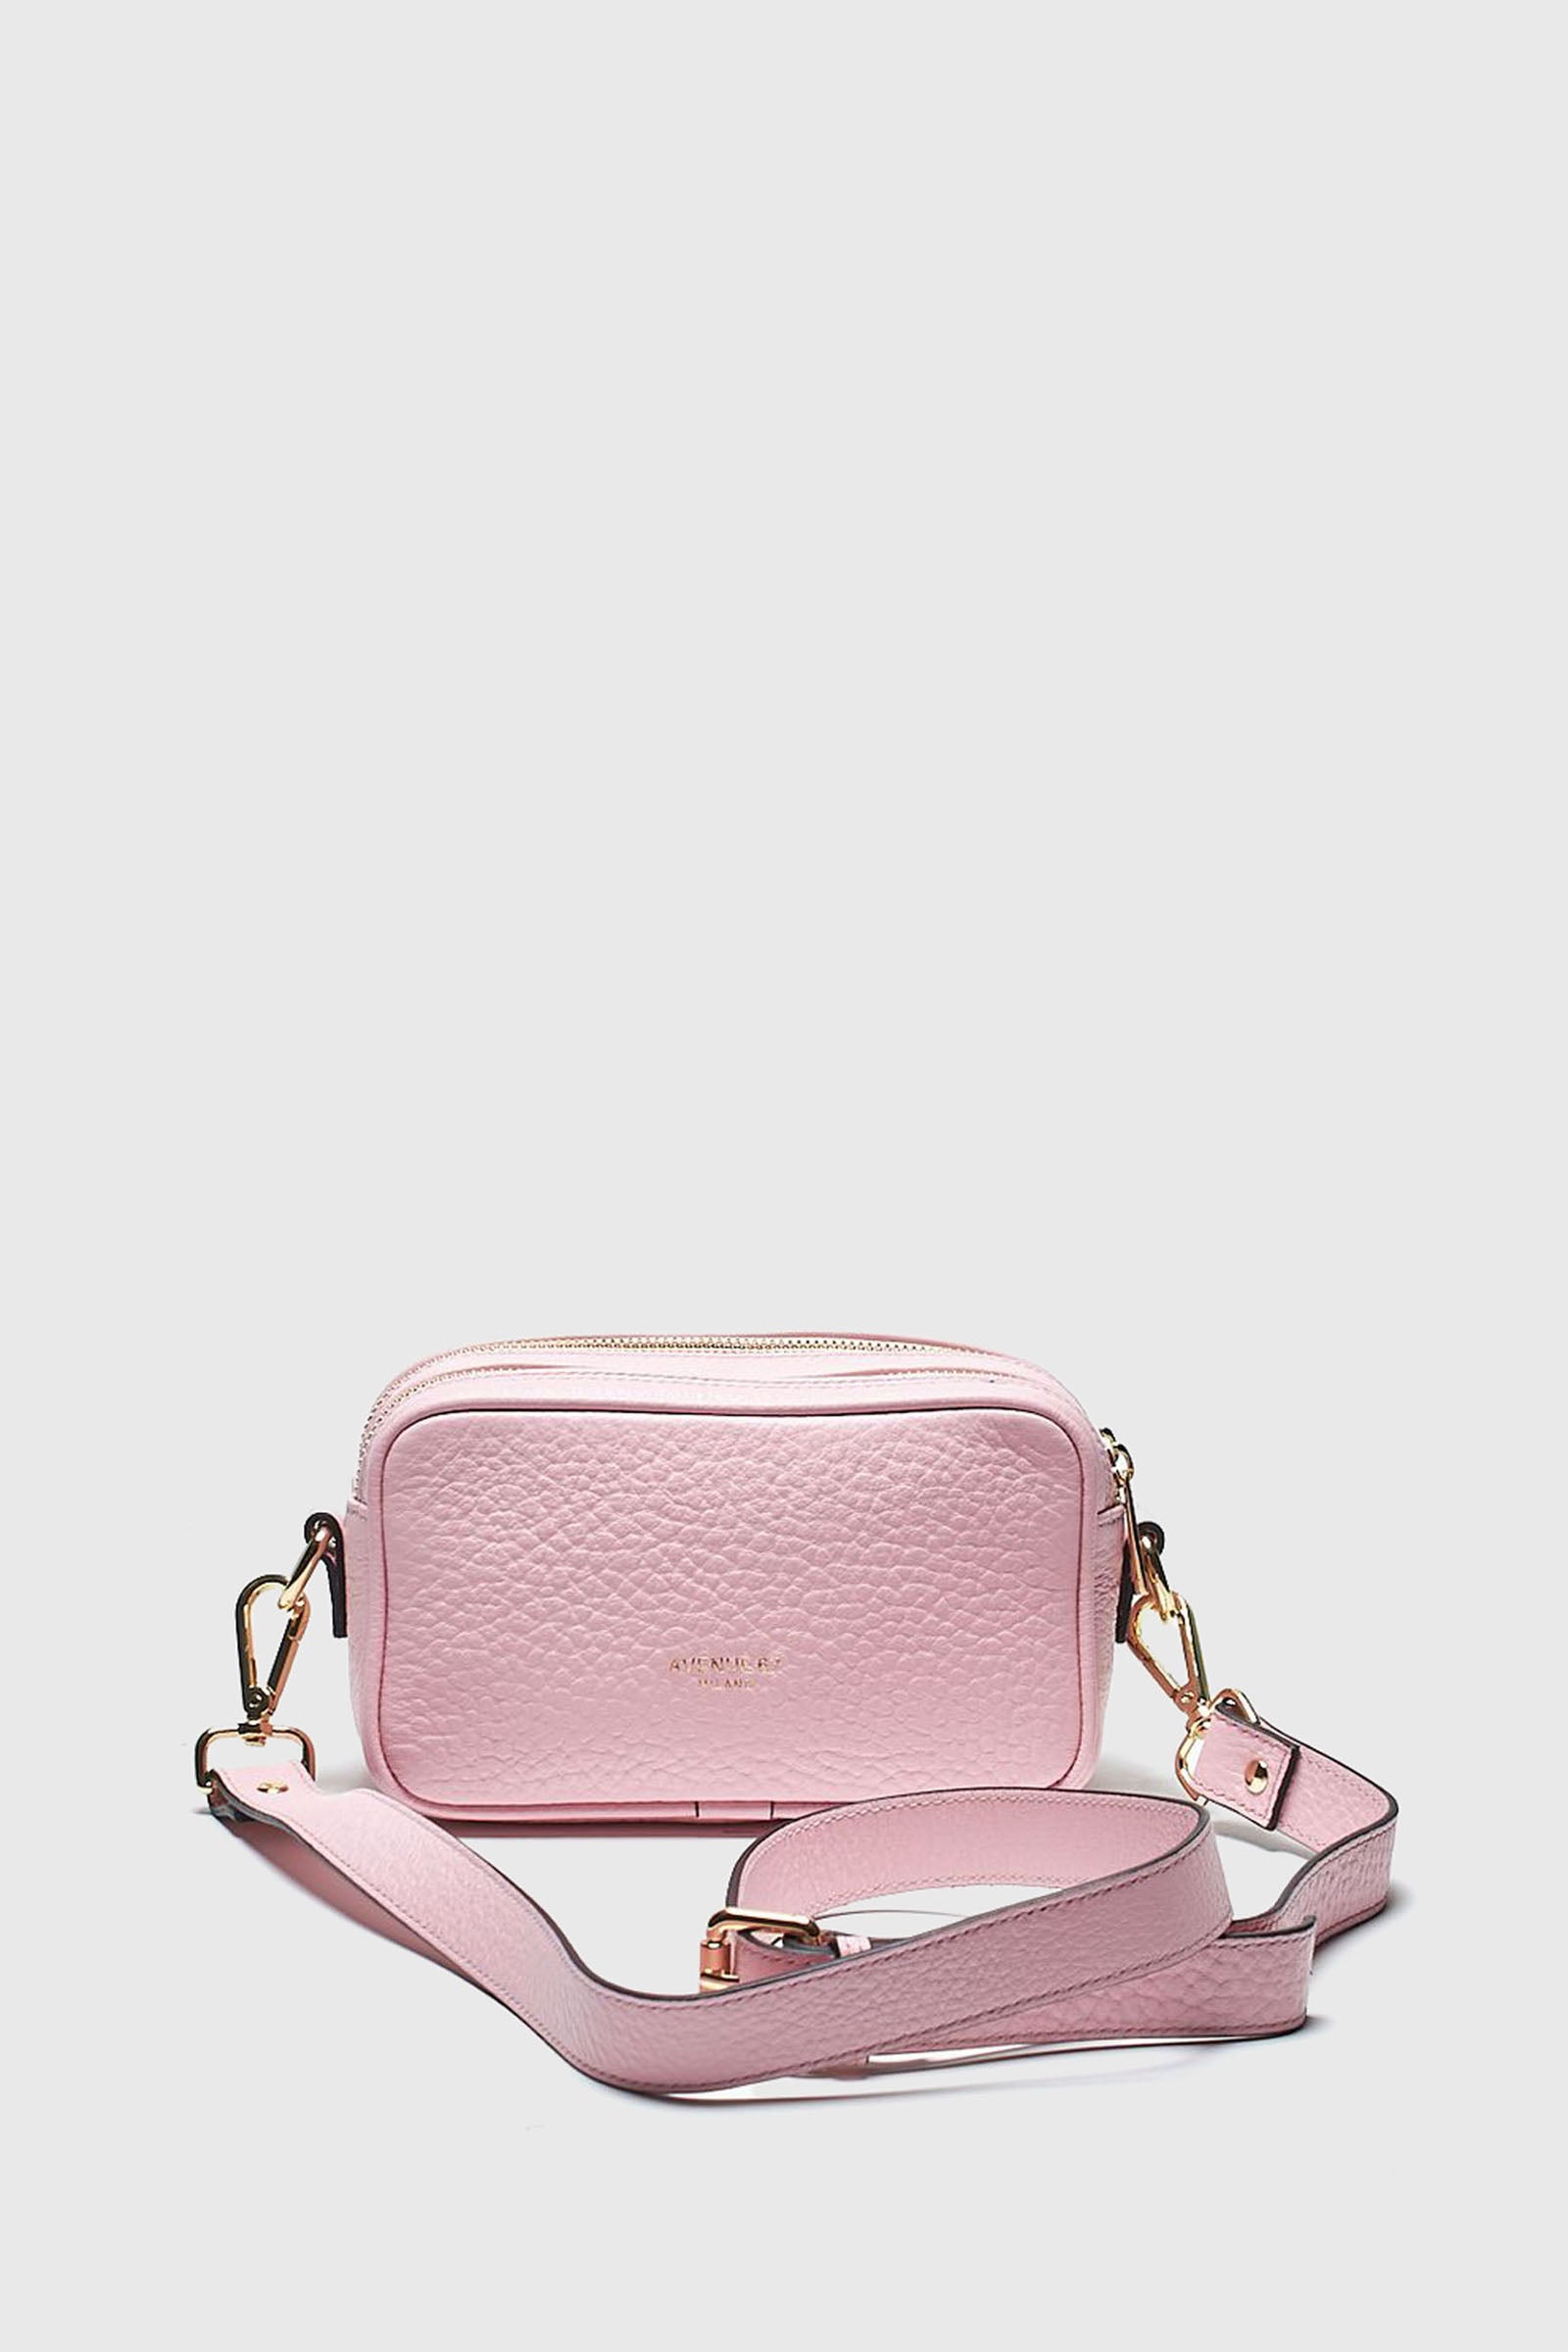 Avenue 67 Gabrielle Leather Bag Pink - 1